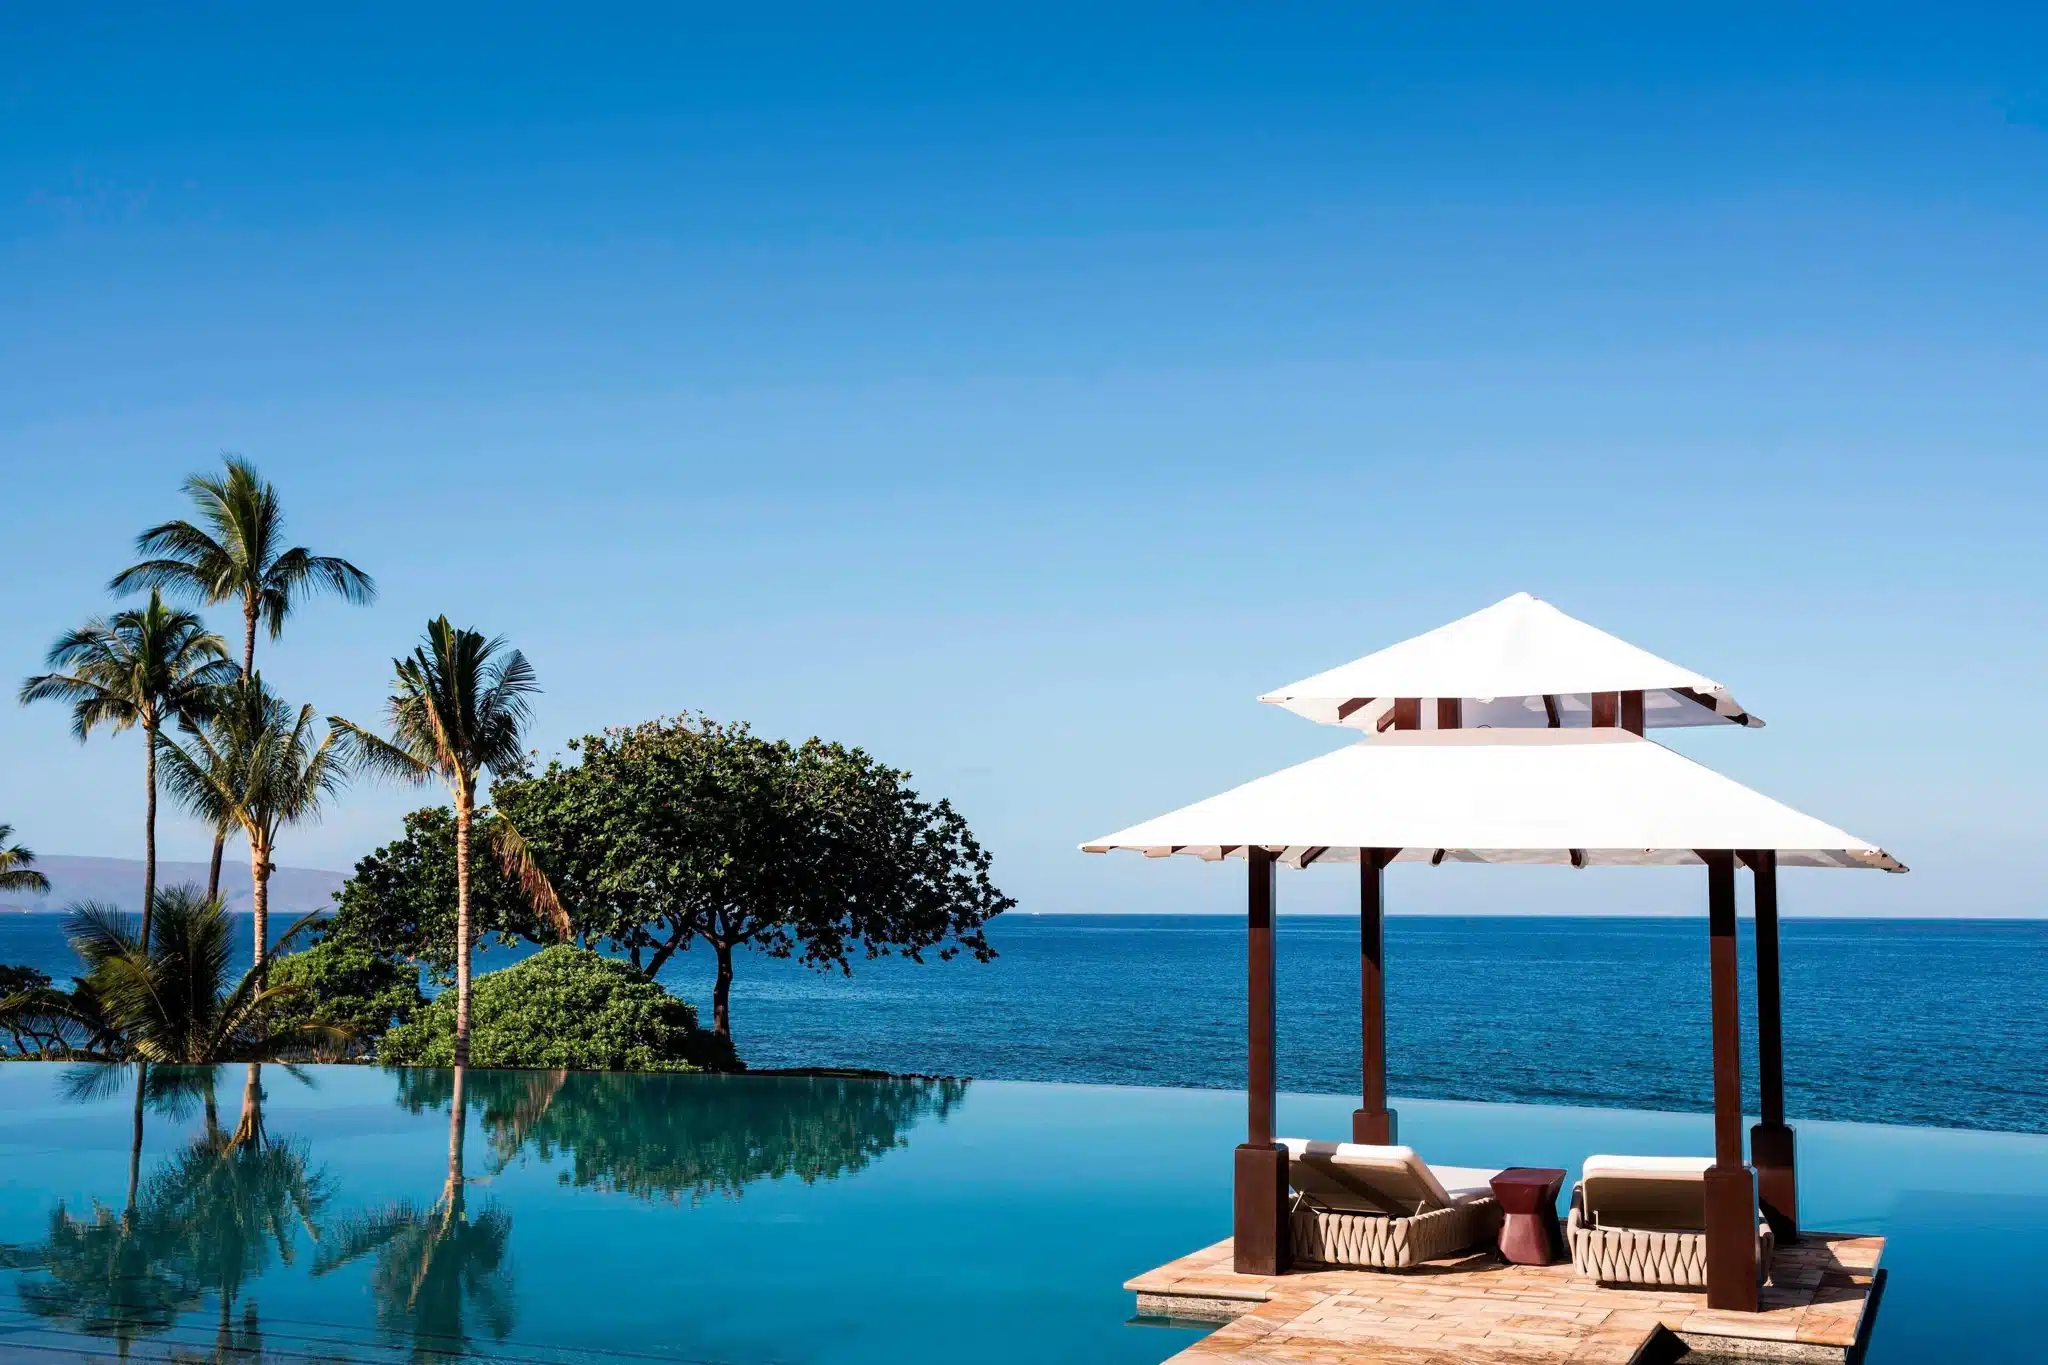 Wailea Beach Resort Marriott is a Hotel located in the city of Kihei on Maui, Hawaii